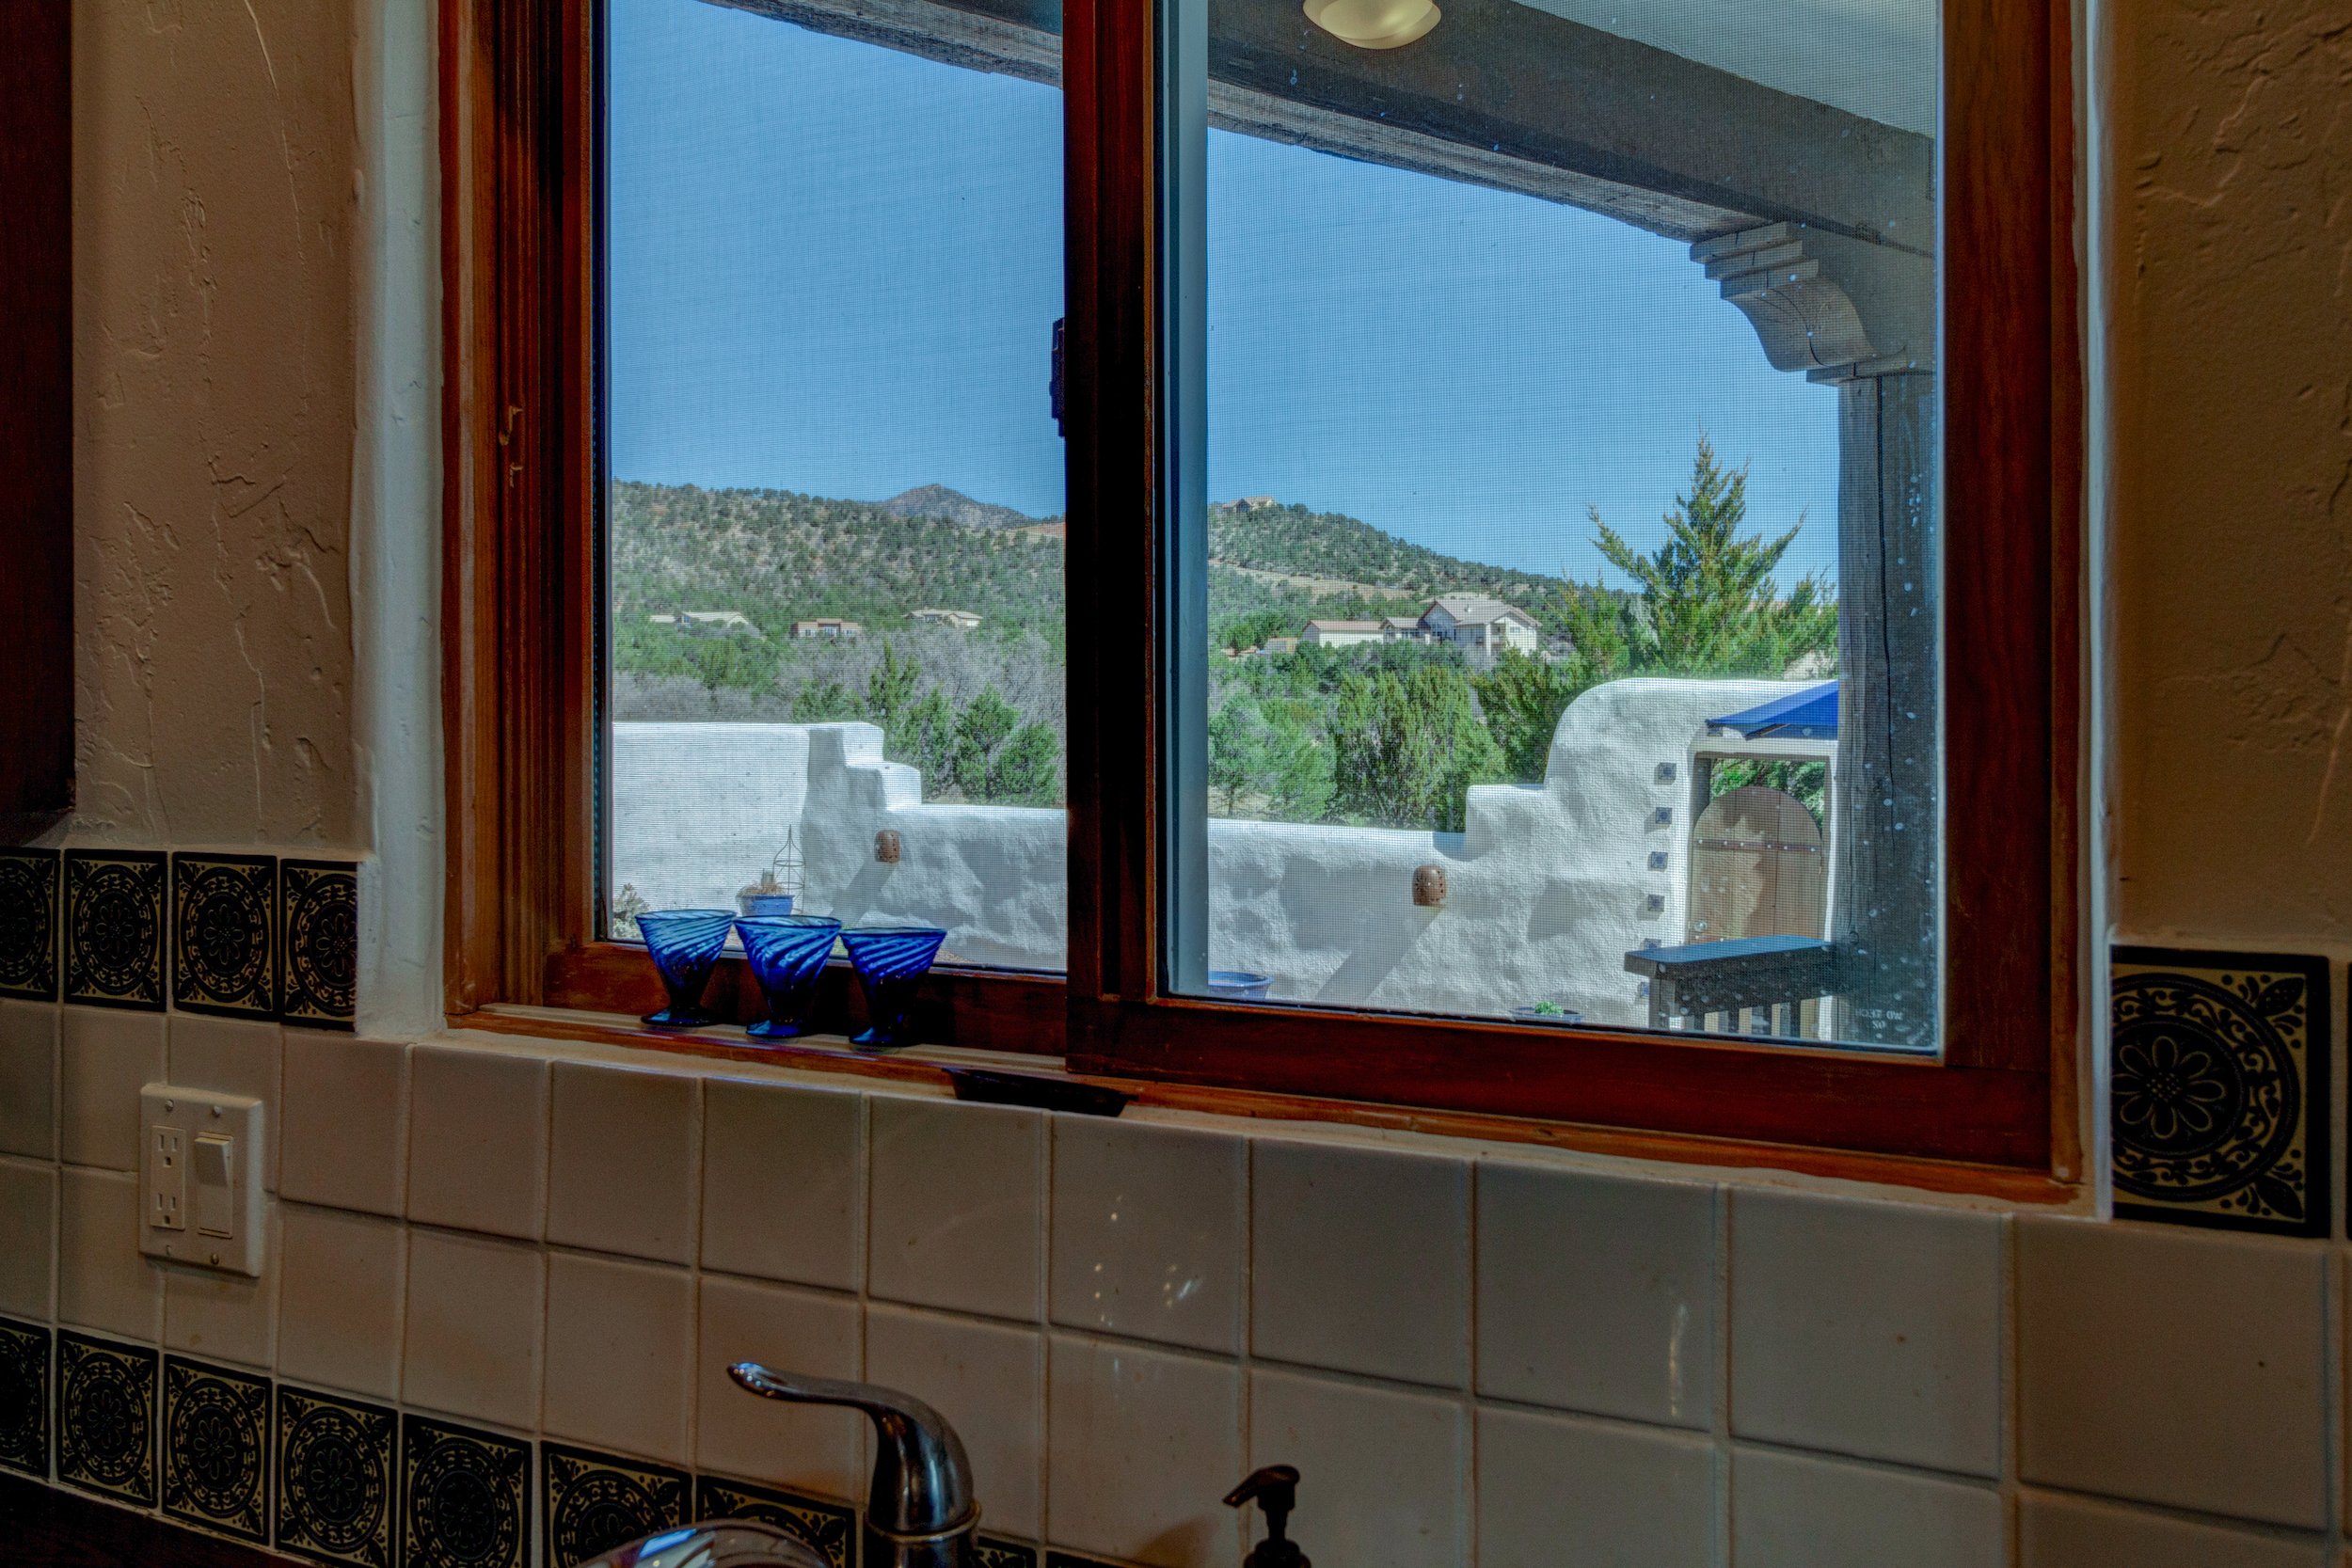 25-View from window over kitchen sink.jpg